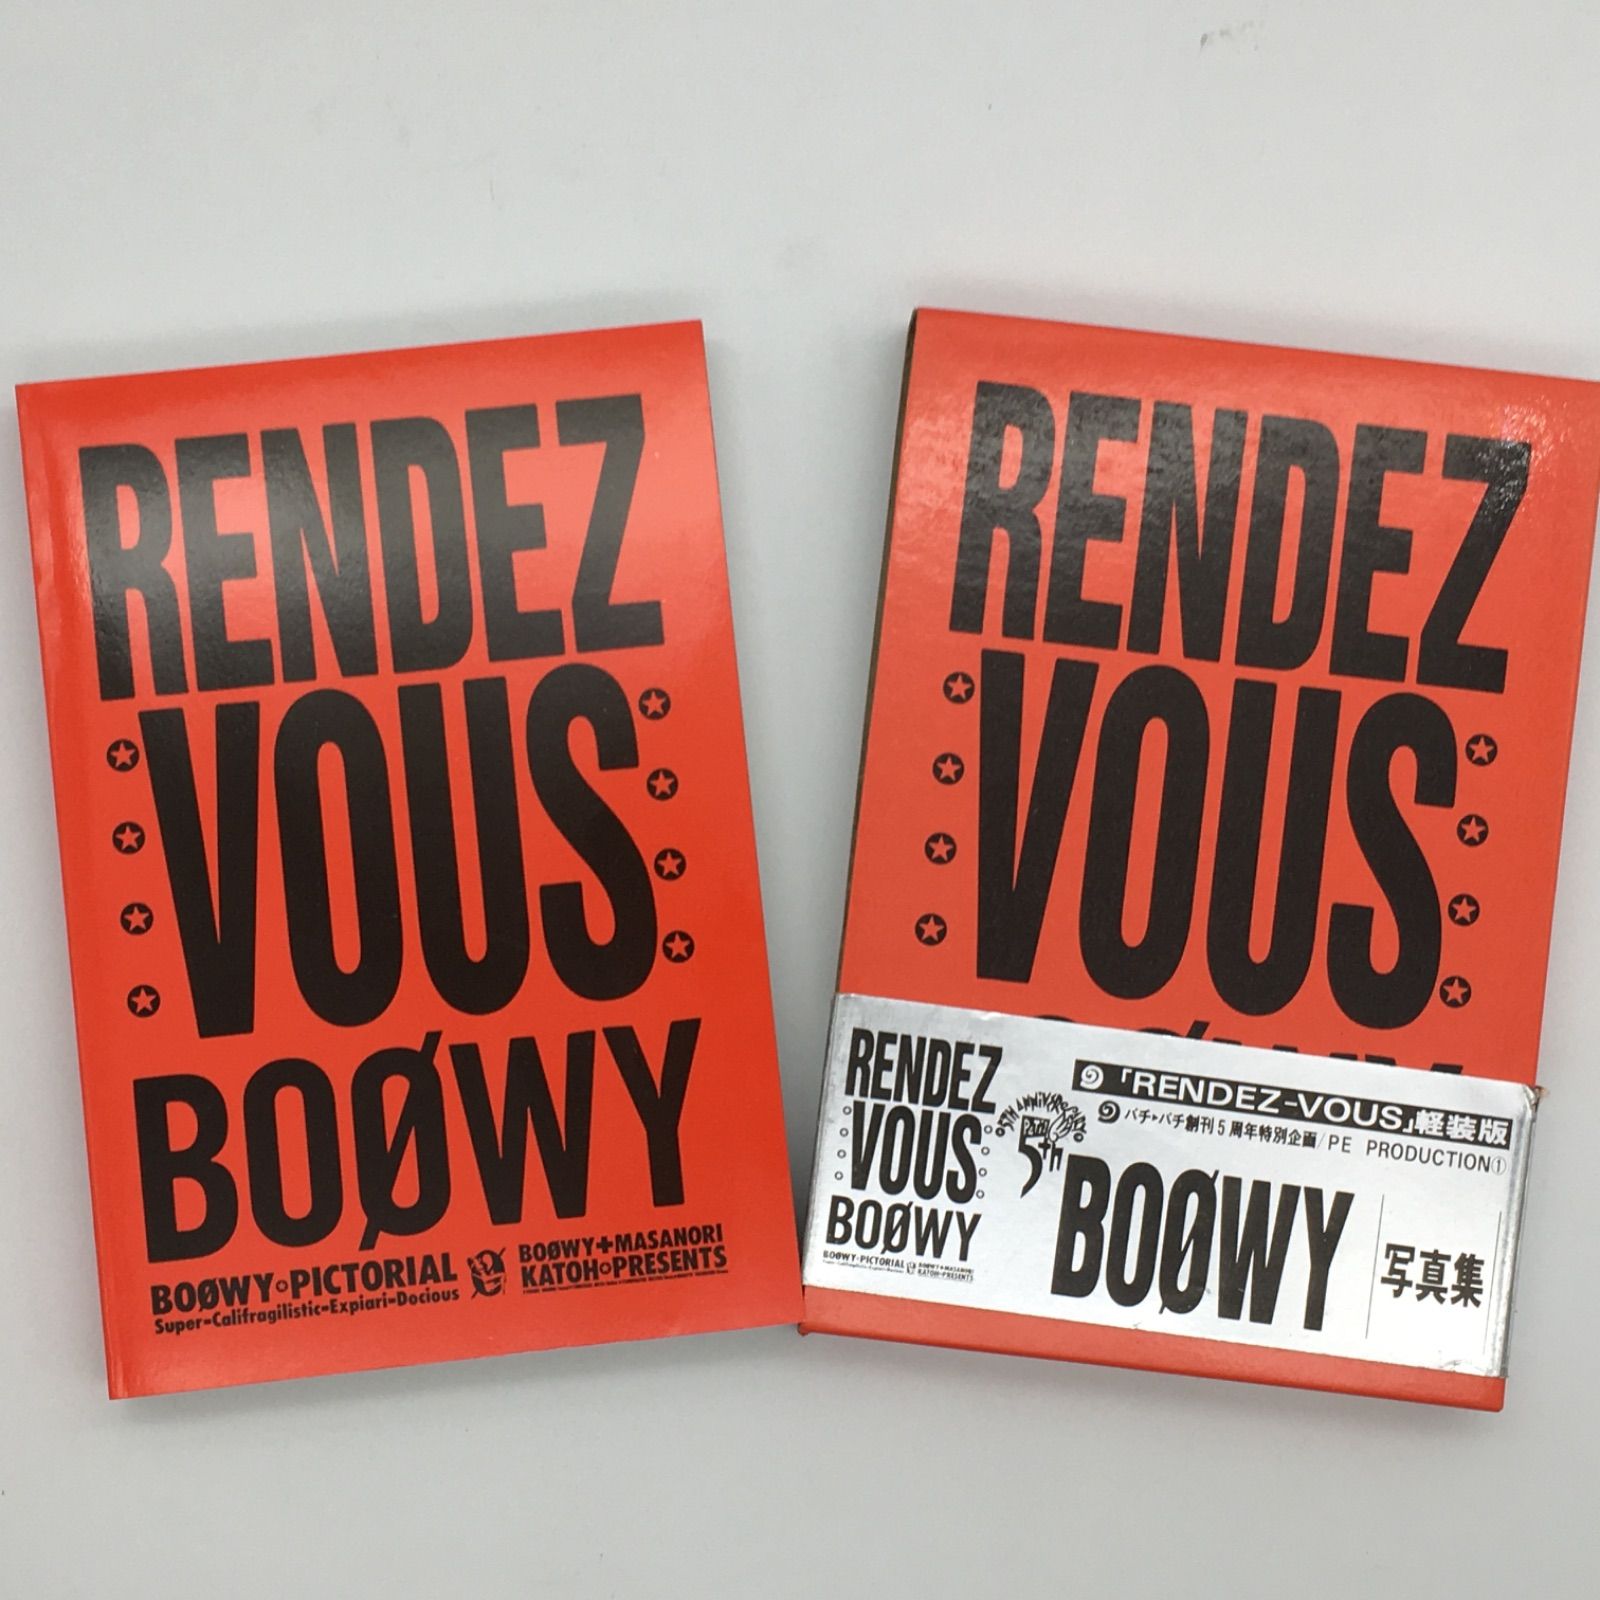 BOOWY RENDEZ-VOUS 写真集 軽装版 - ブック・ライン - メルカリ